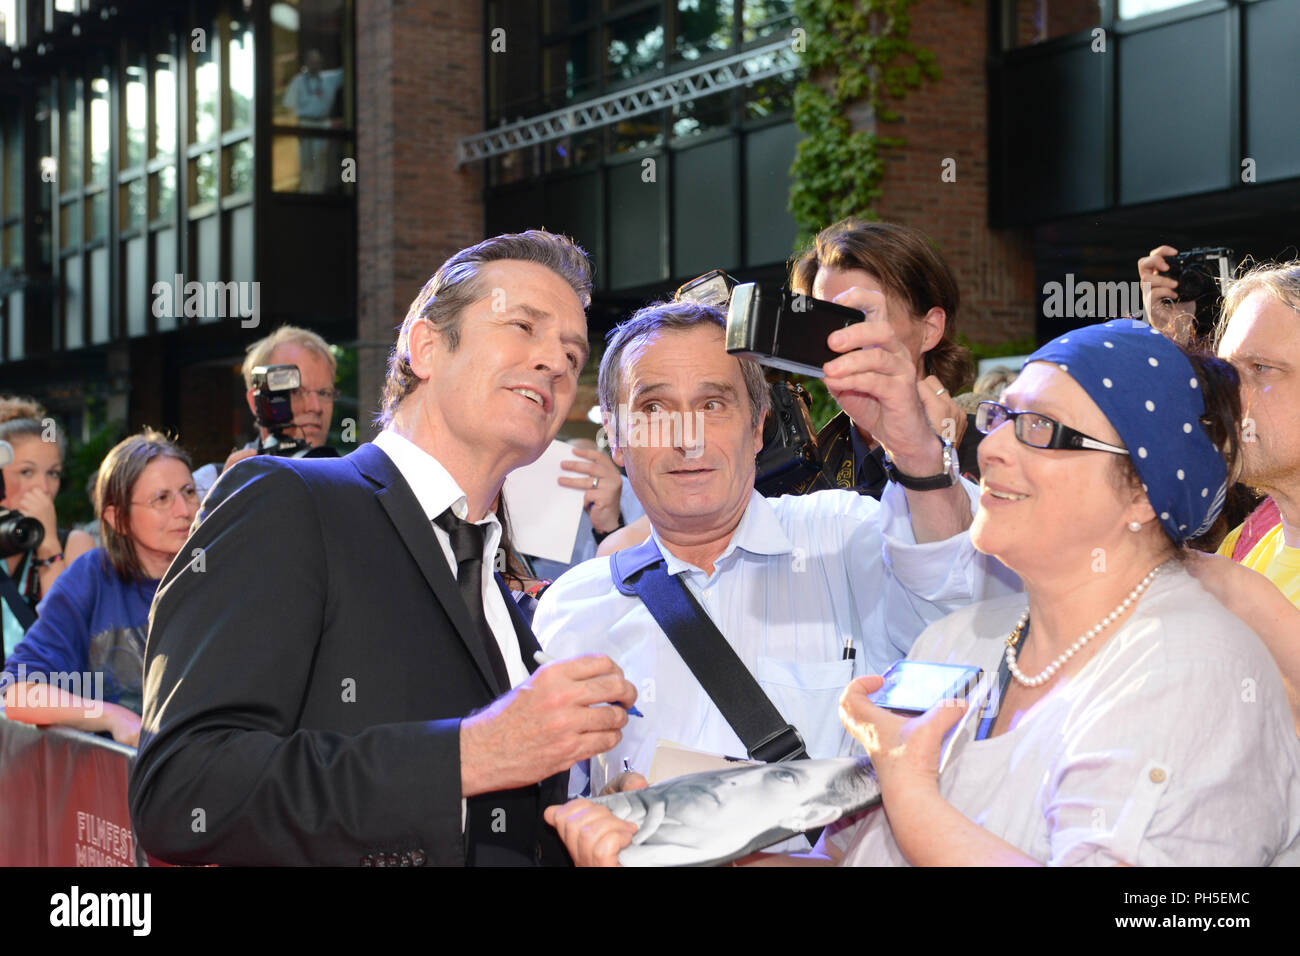 Actor Rupert Everett with Fans seen at Filmfest München 2015 Stock Photo